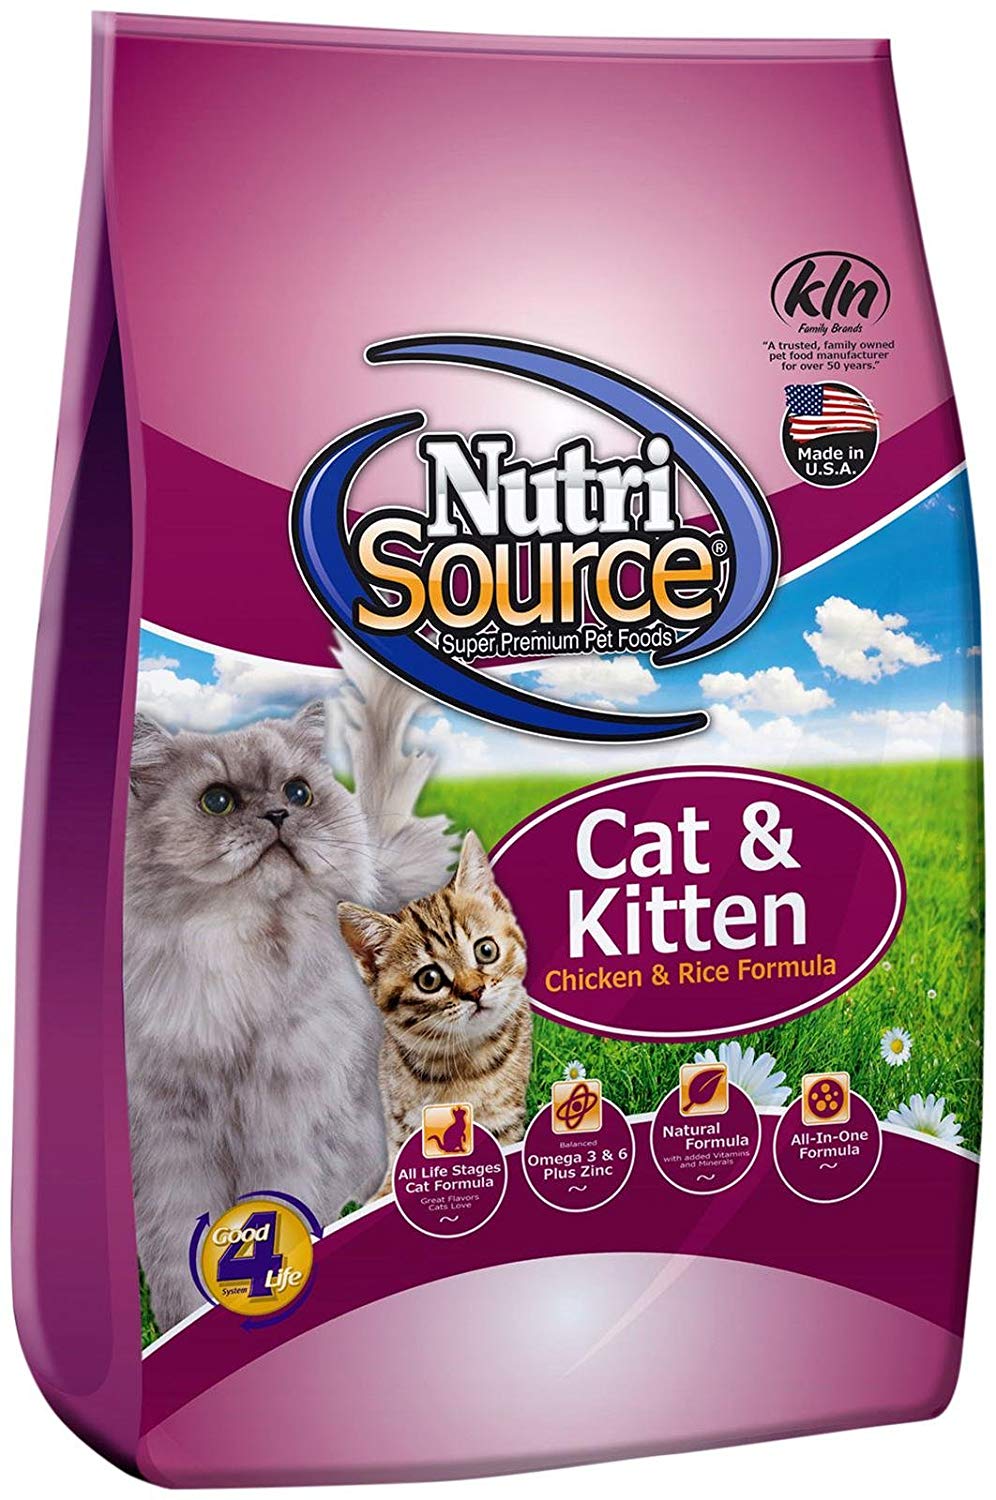 Nutri Source Cat & Kitten Chicken & Rice Formula